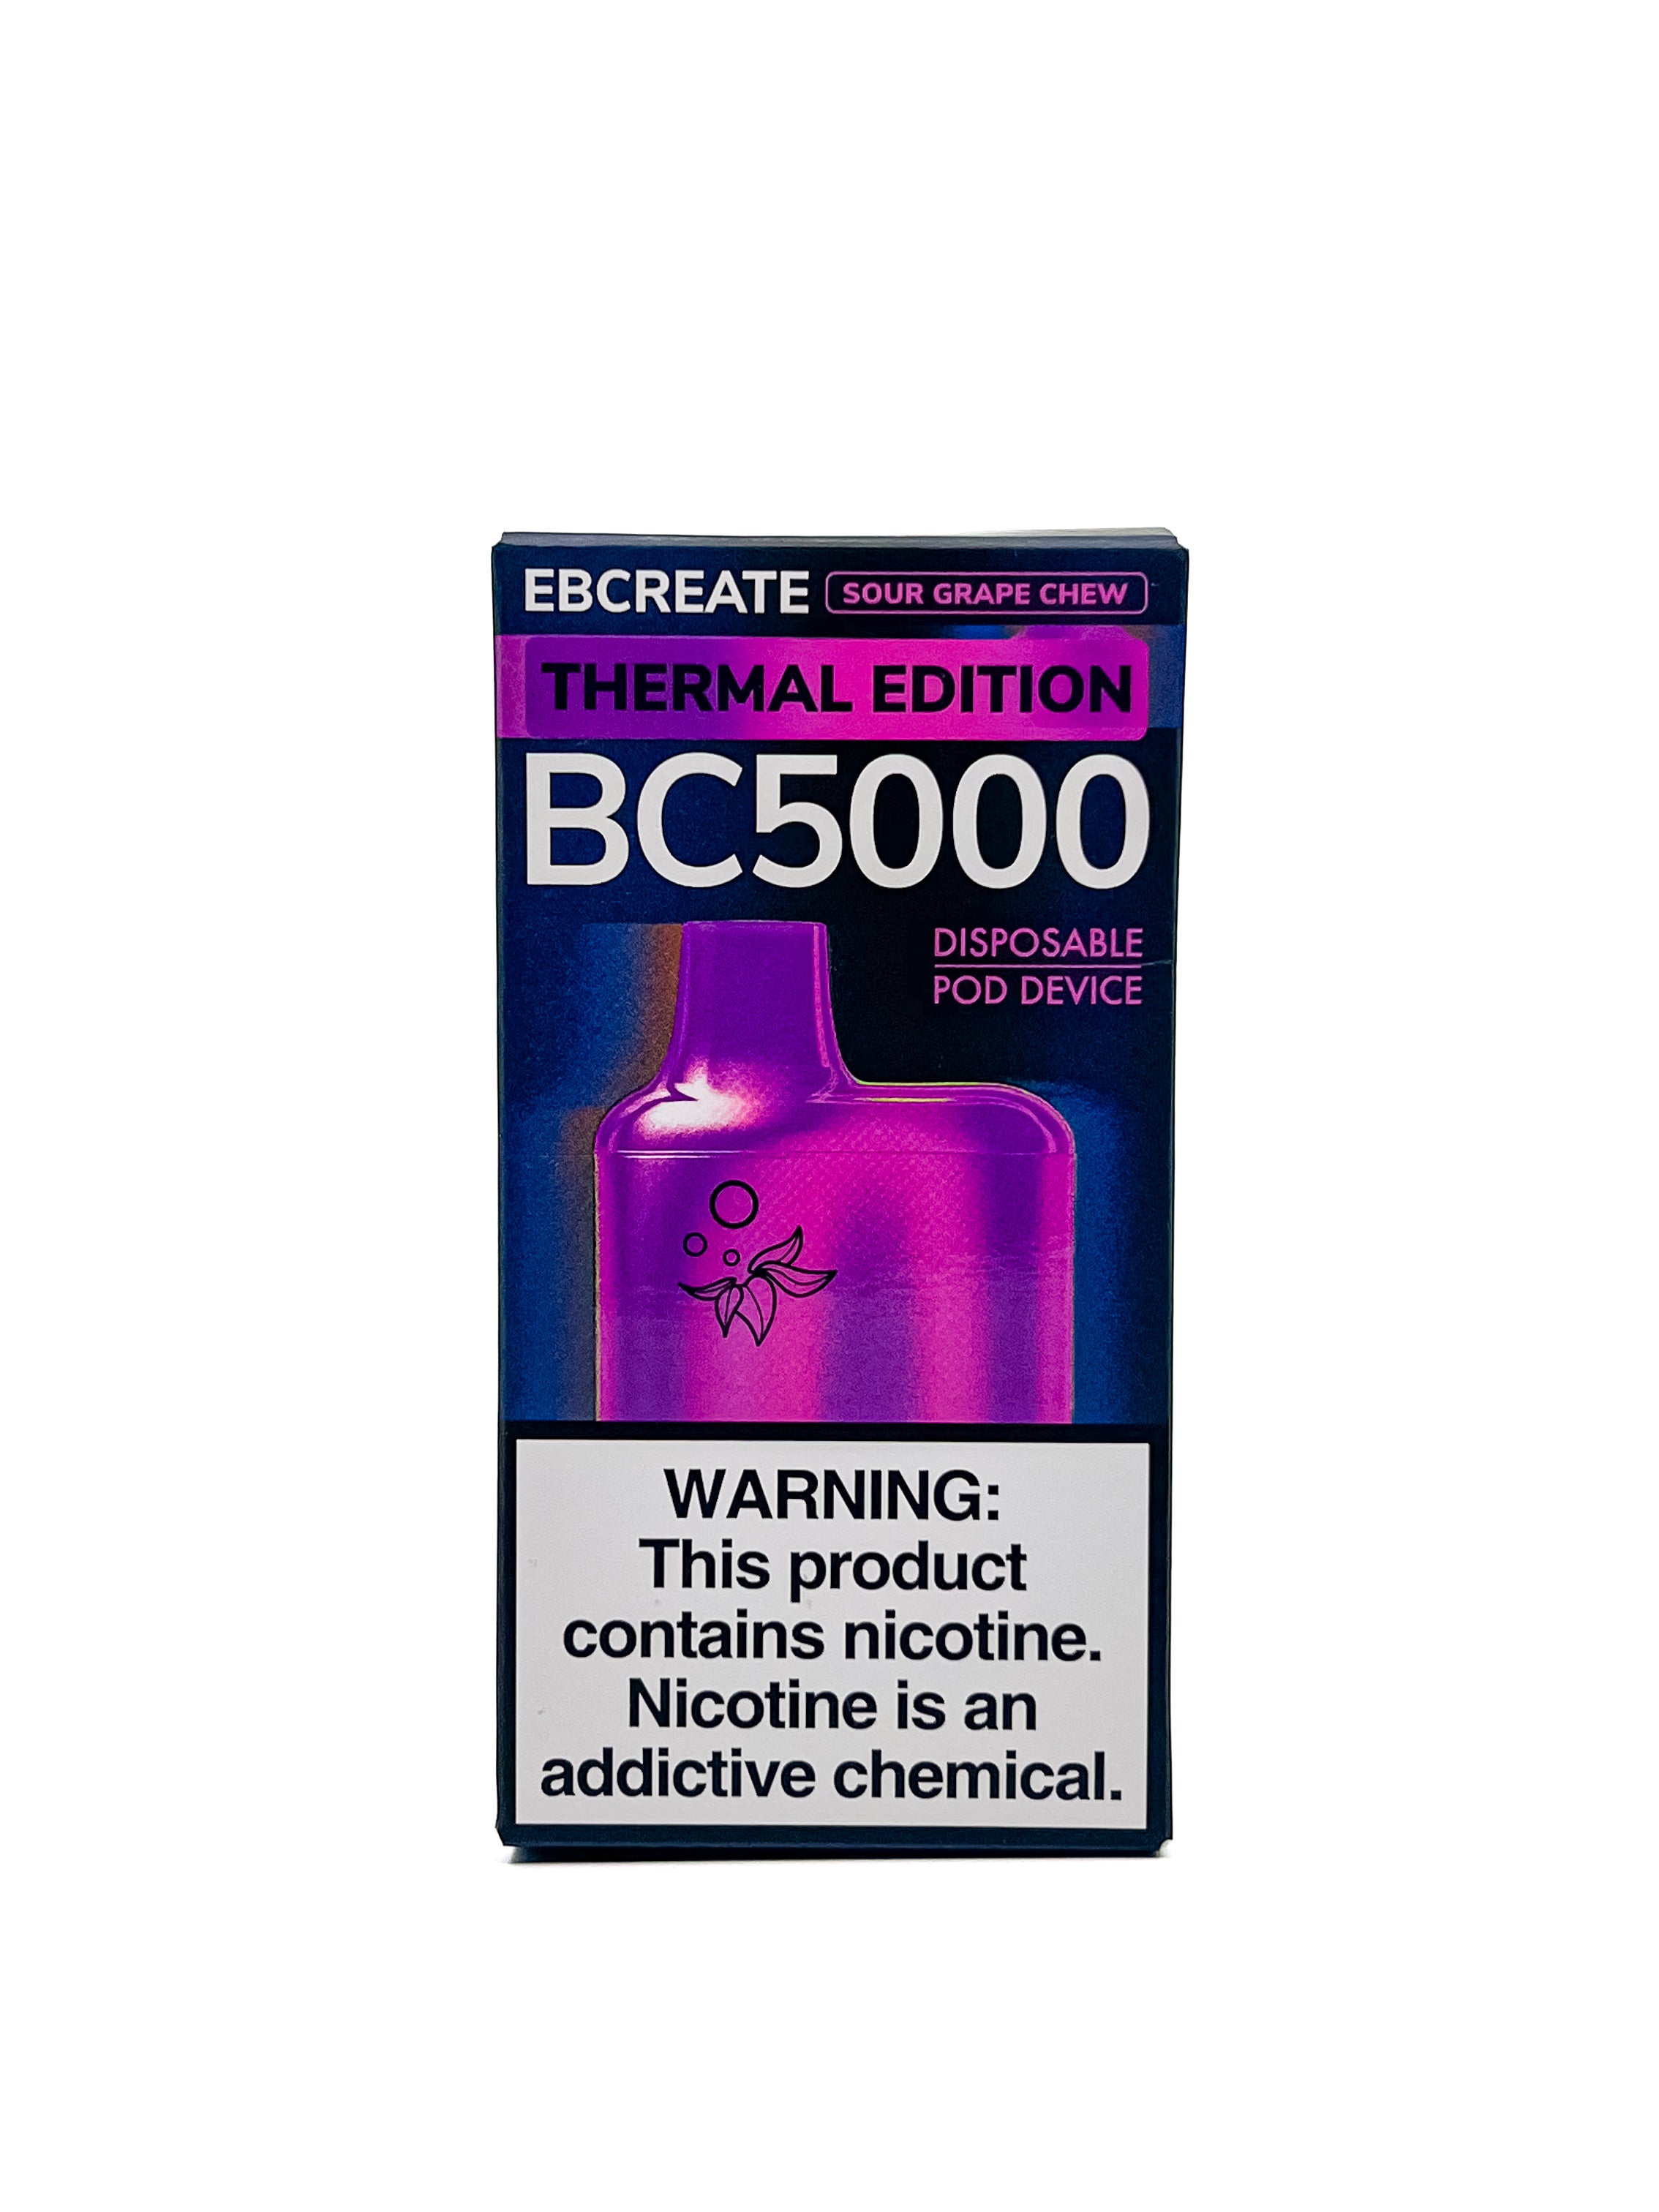 BC5000 Thermal Edition | Sour Grape Chew